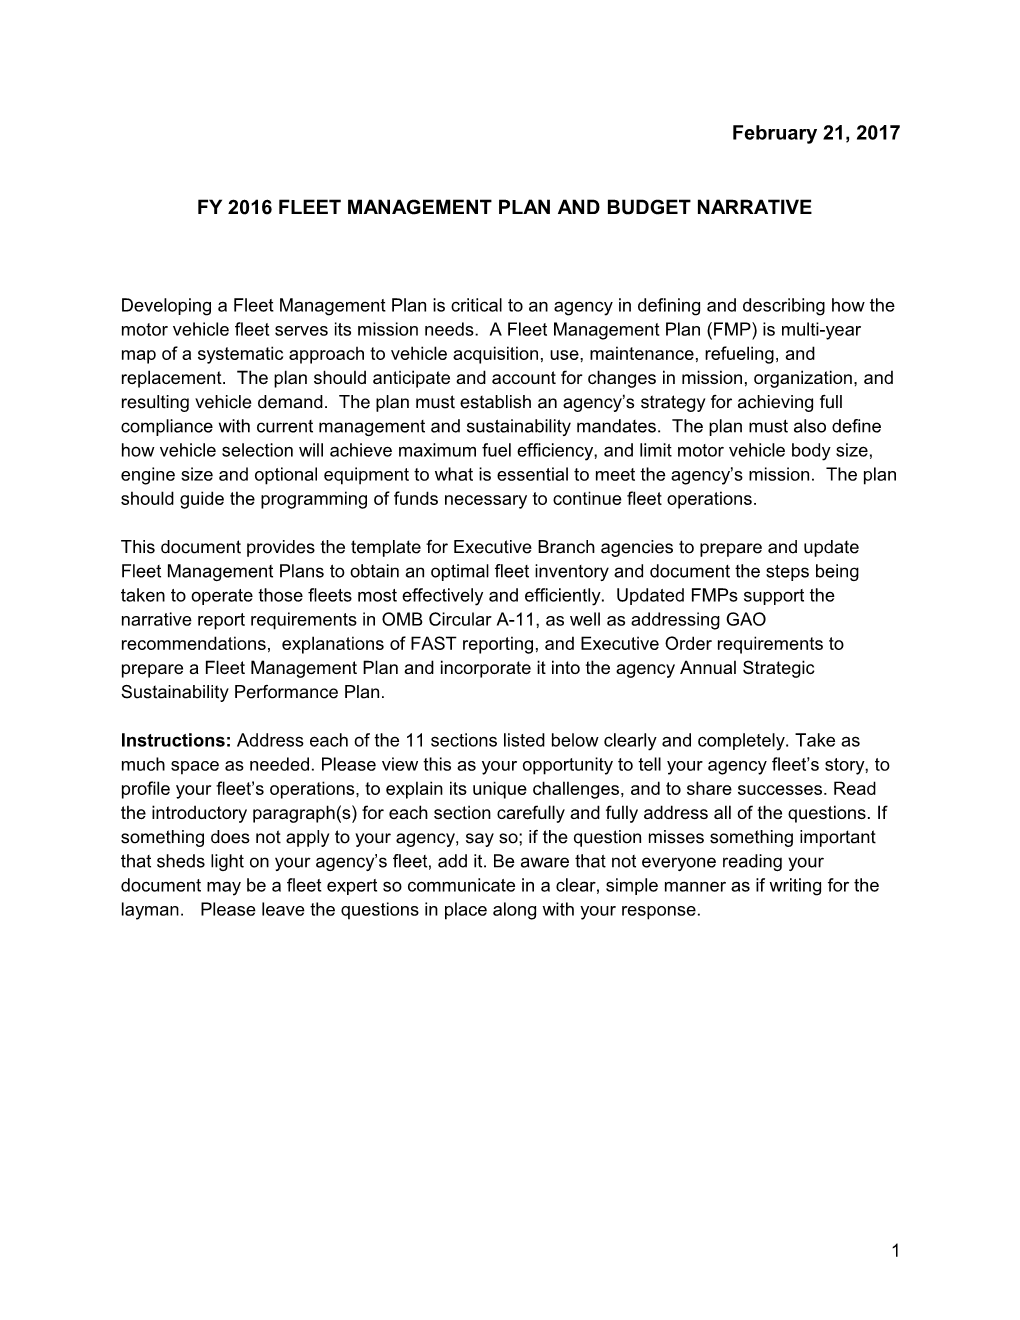 Fy 2016 Fleet Management Plan and Budget Narrative